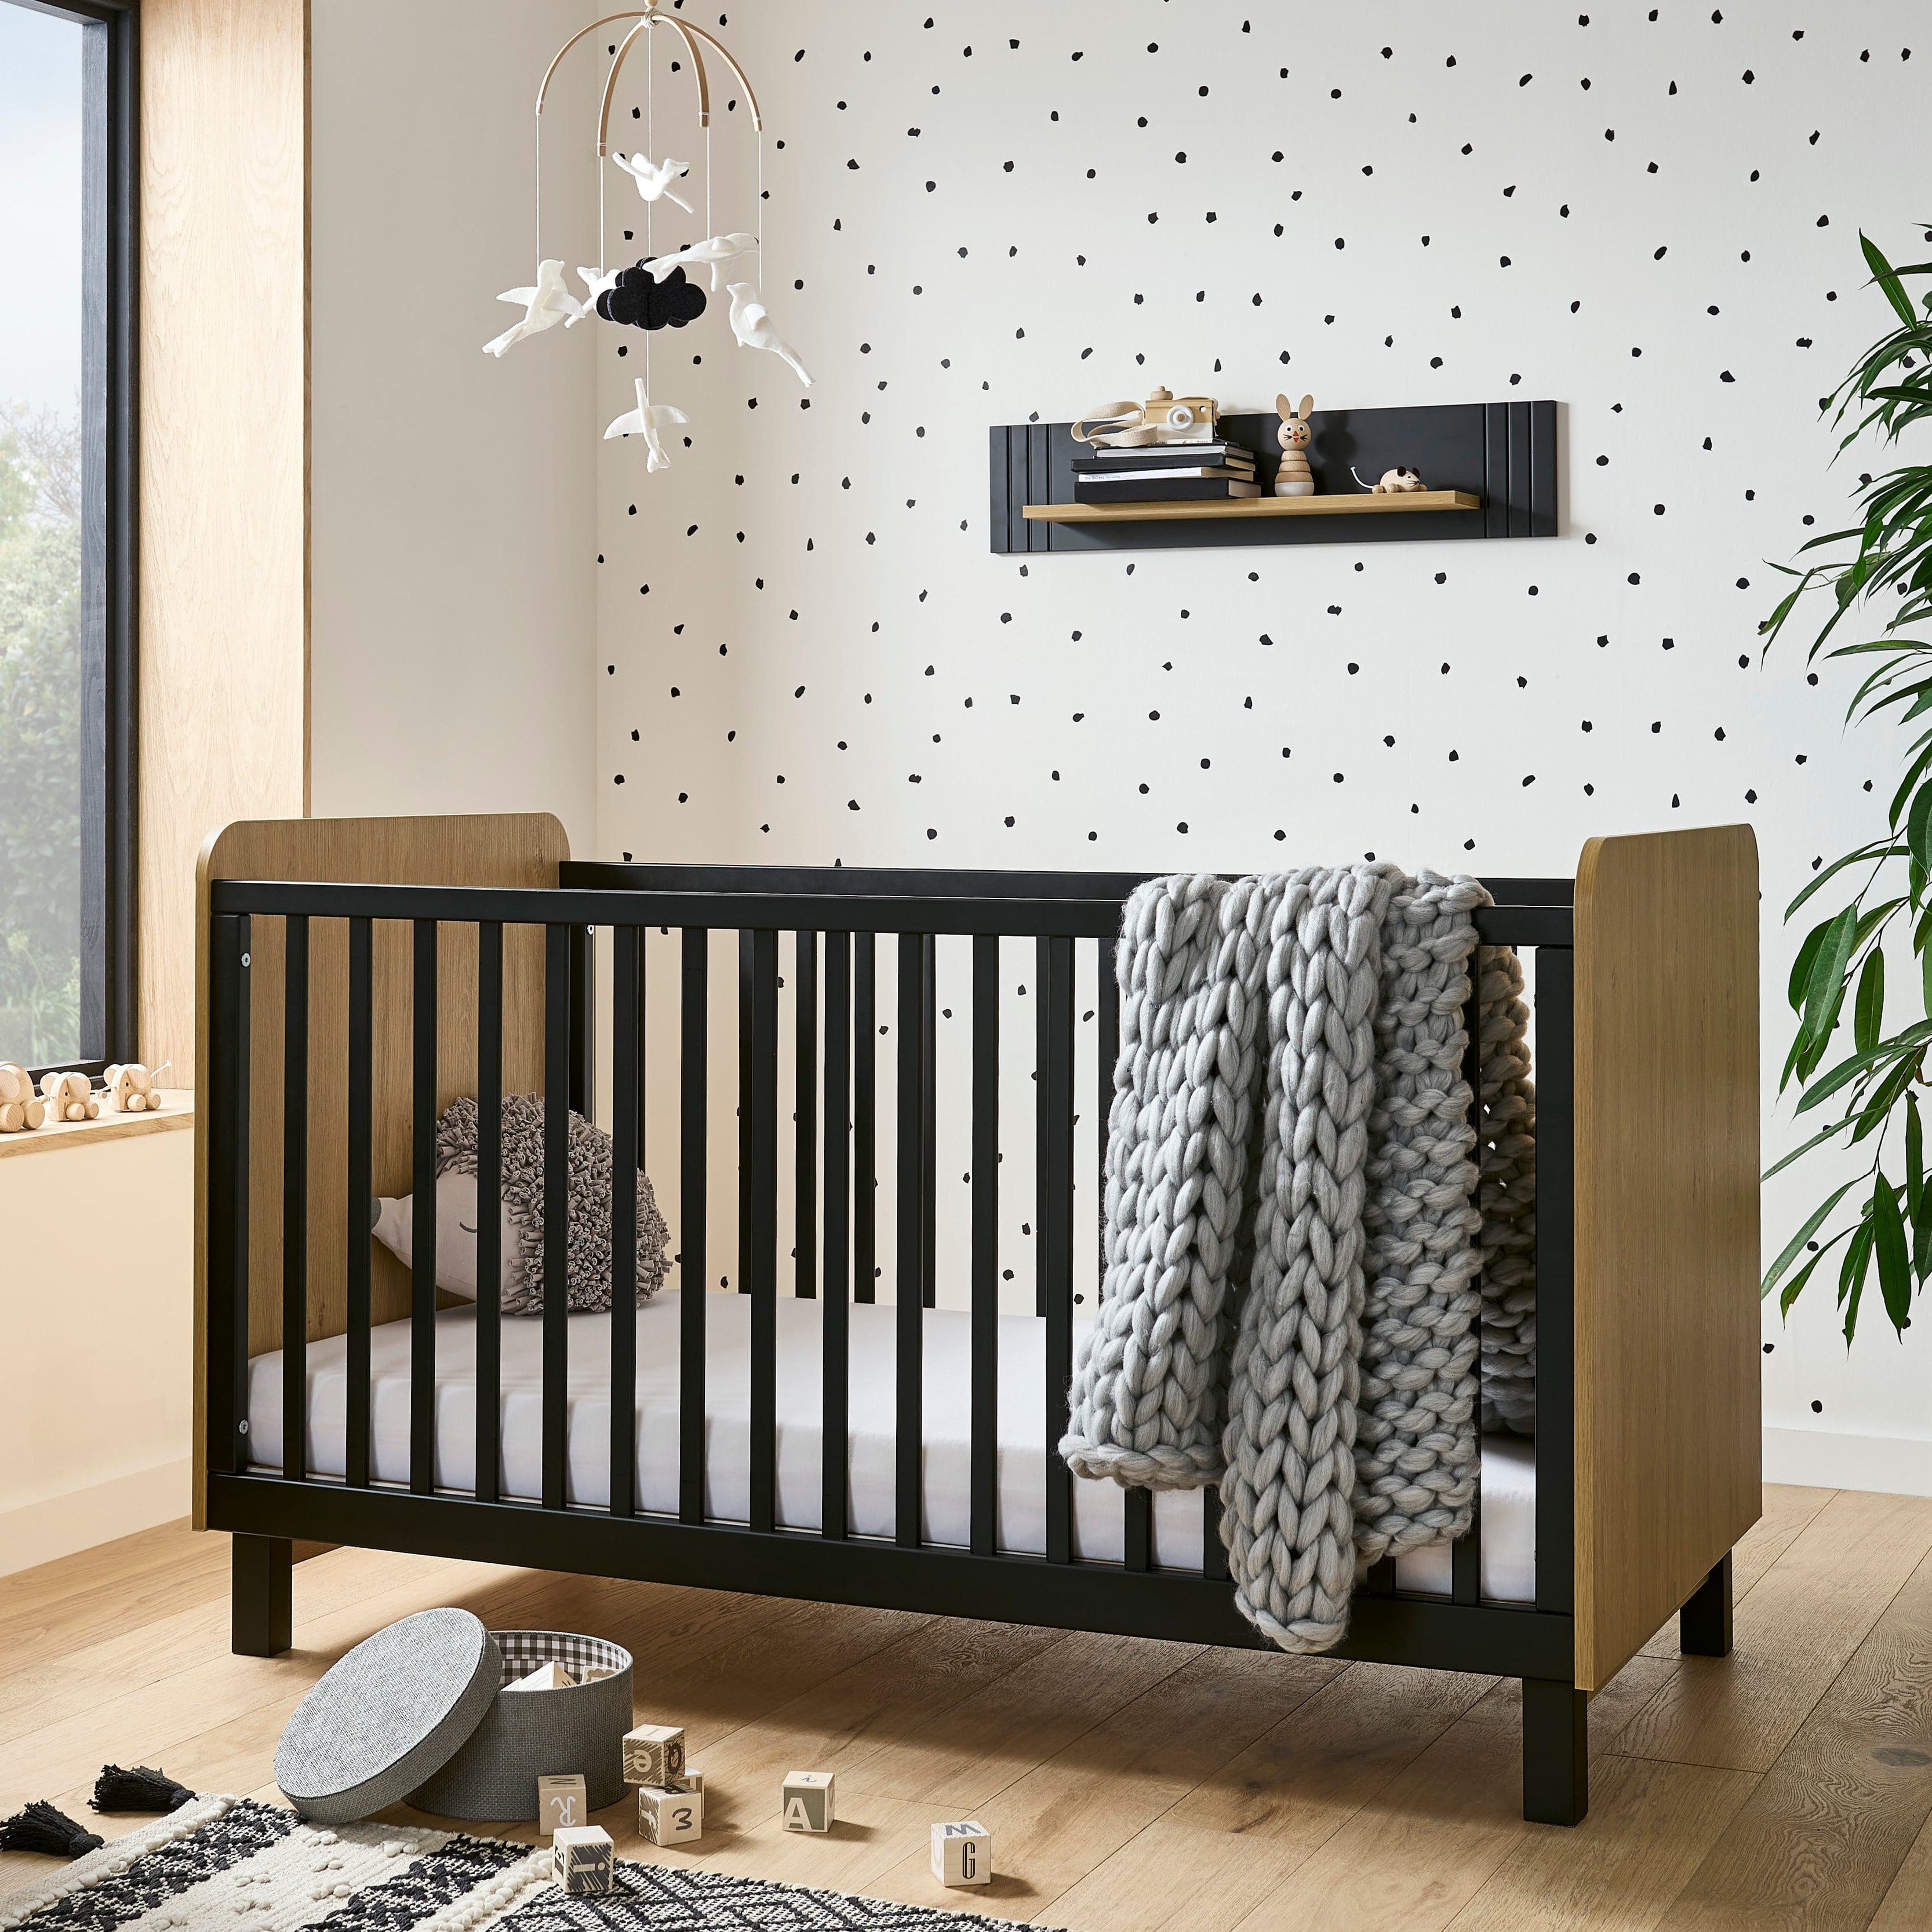 Cuddleco Rafi 3 Piece Nursery Furniture Set - Oak & Black - For Your Little One